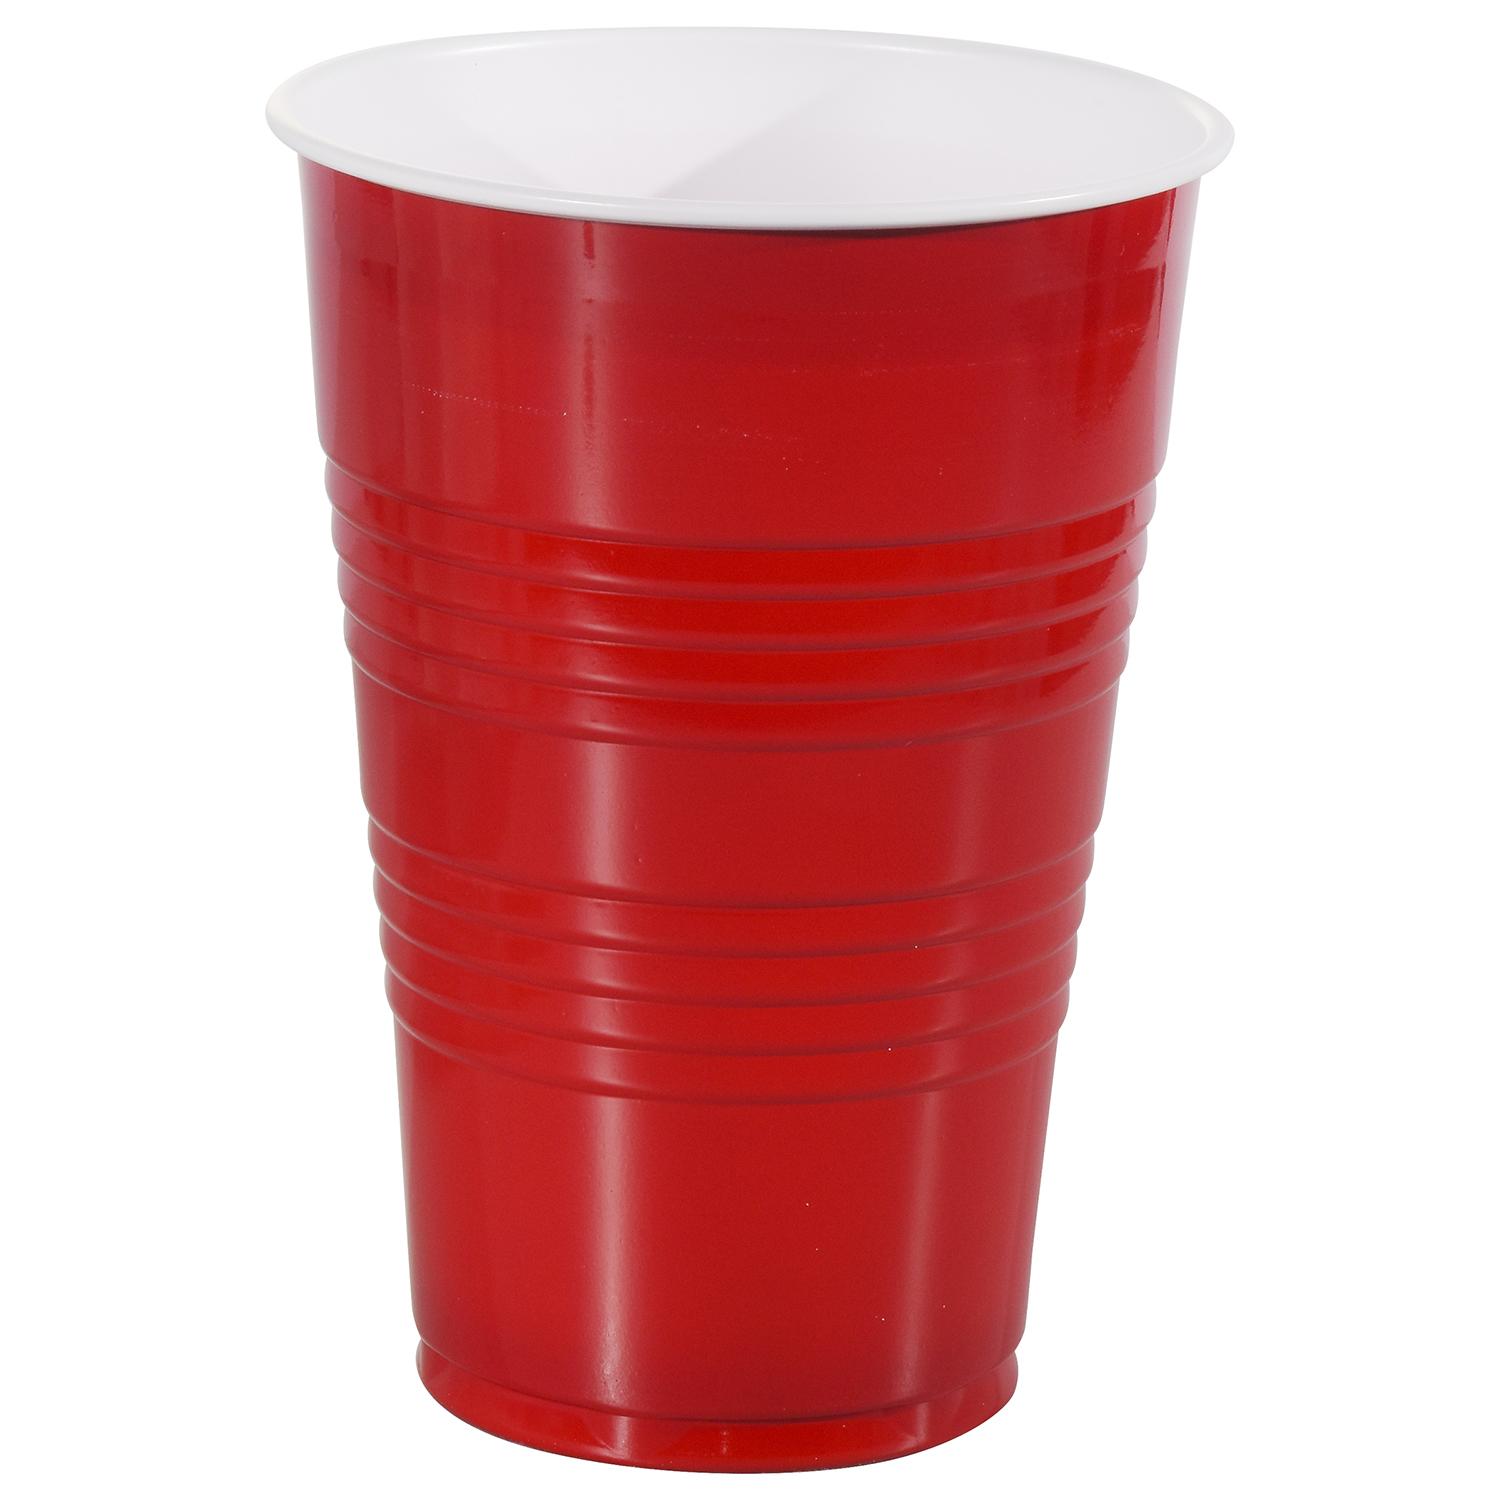 True Red Party Cups 16oz 24Pk - Luekens Wine & Spirits